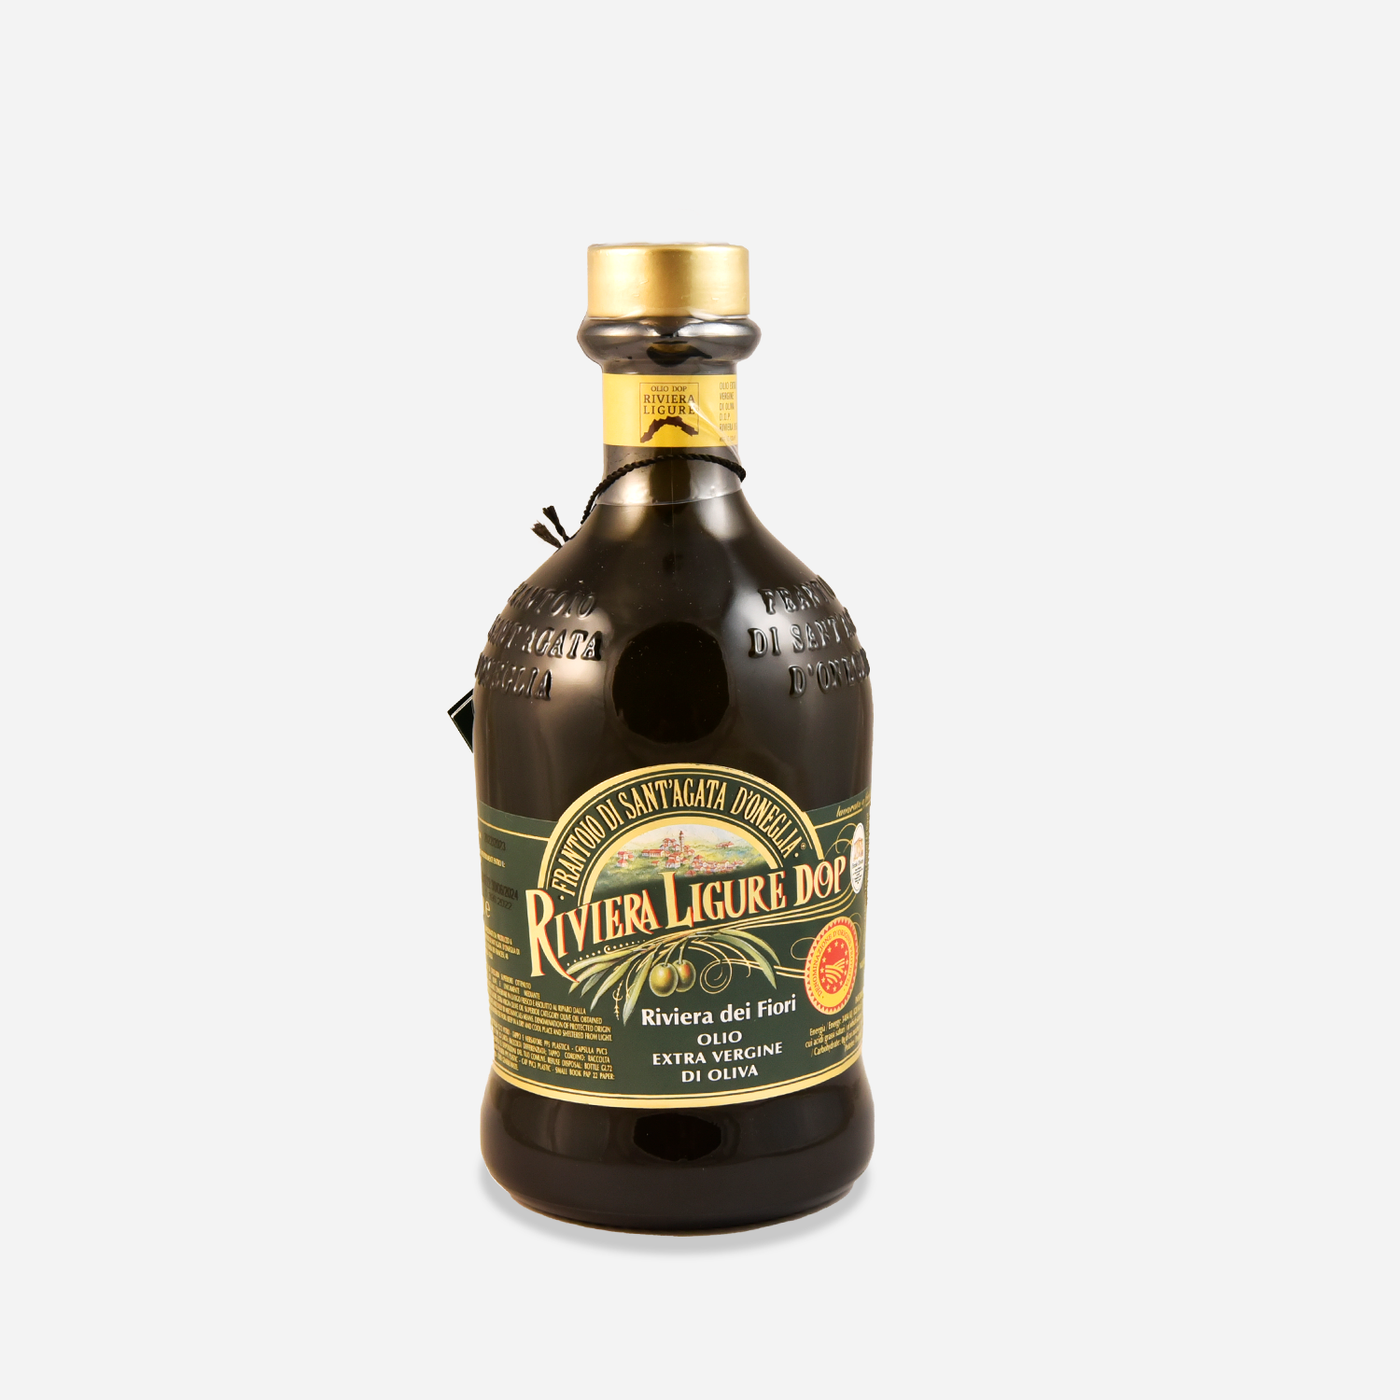 Riviera Ligure DOP Extra virgin olive oil